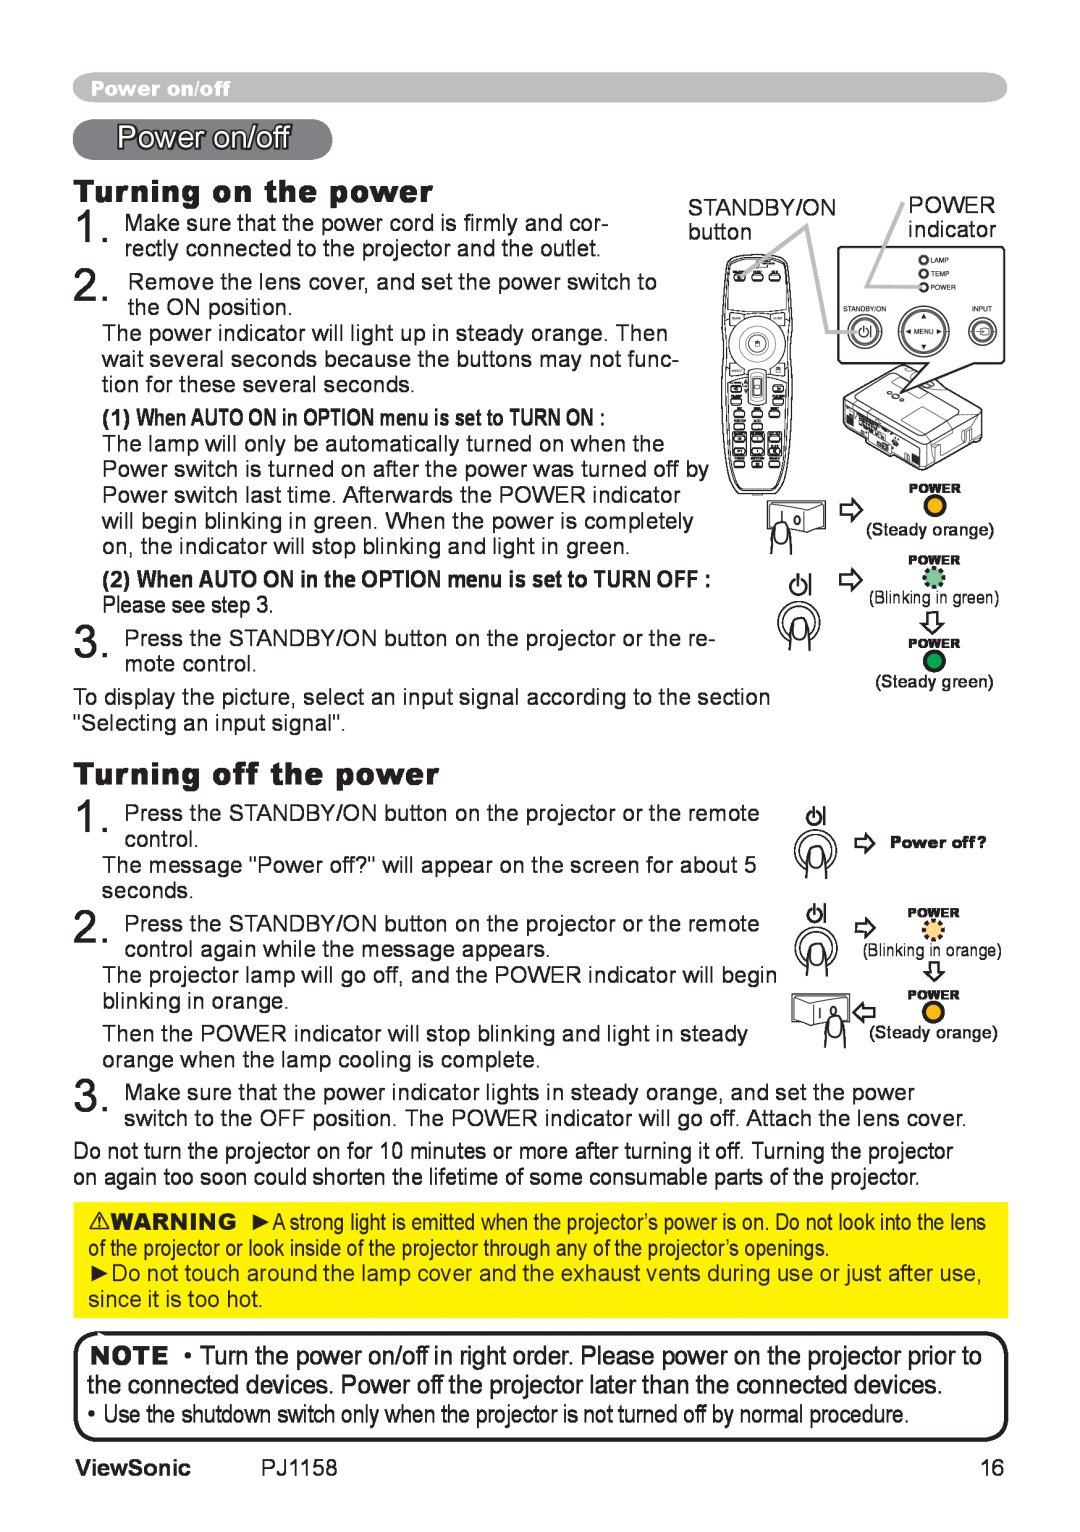 ViewSonic PJ1158 manual Power on/off, Turning on the power, Turning off the power 